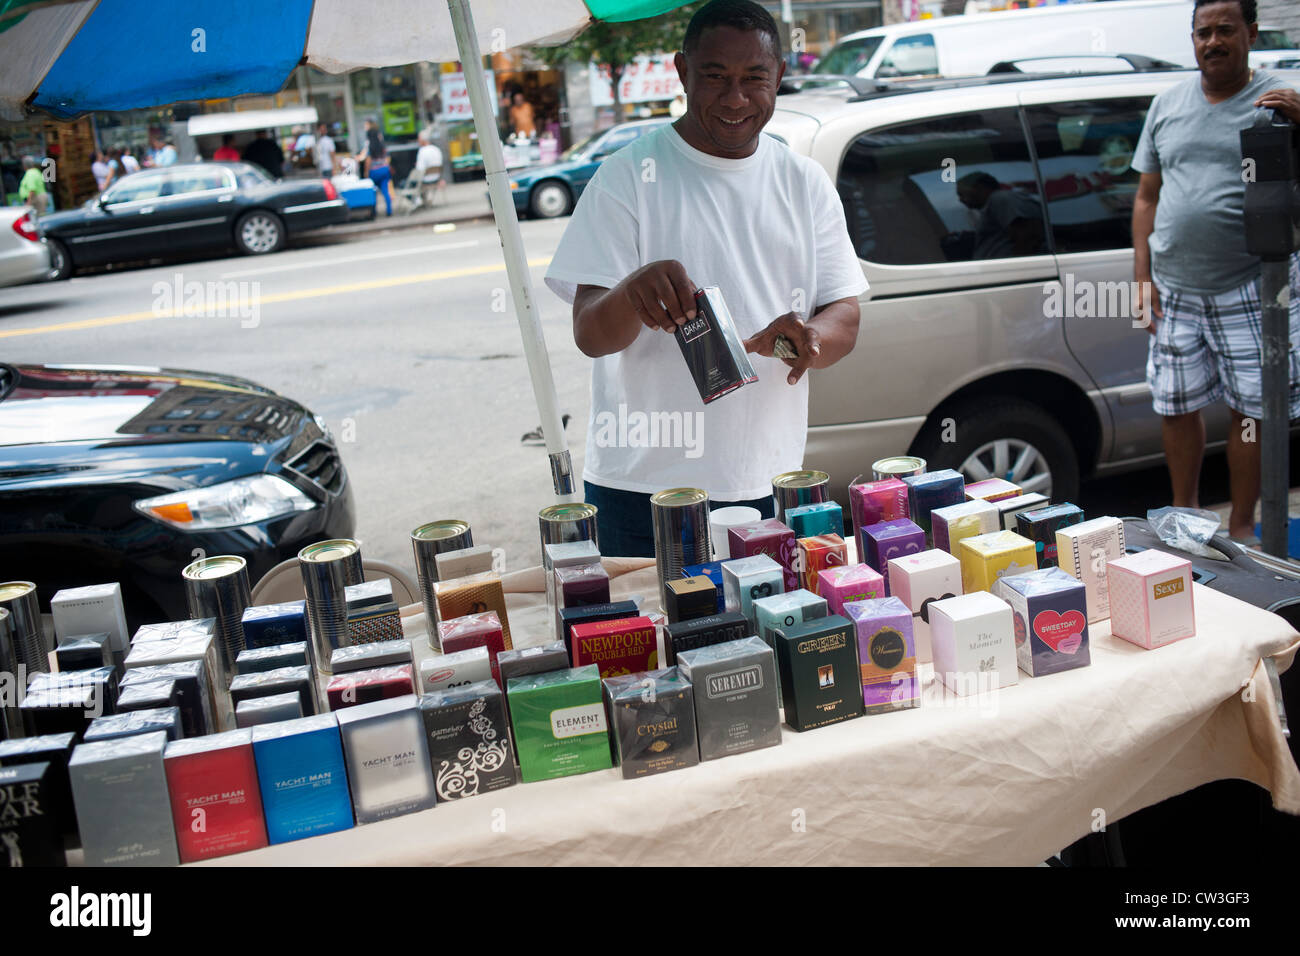 https://c8.alamy.com/comp/CW3GF3/street-vendor-selling-perfume-in-the-primarily-dominican-new-york-CW3GF3.jpg